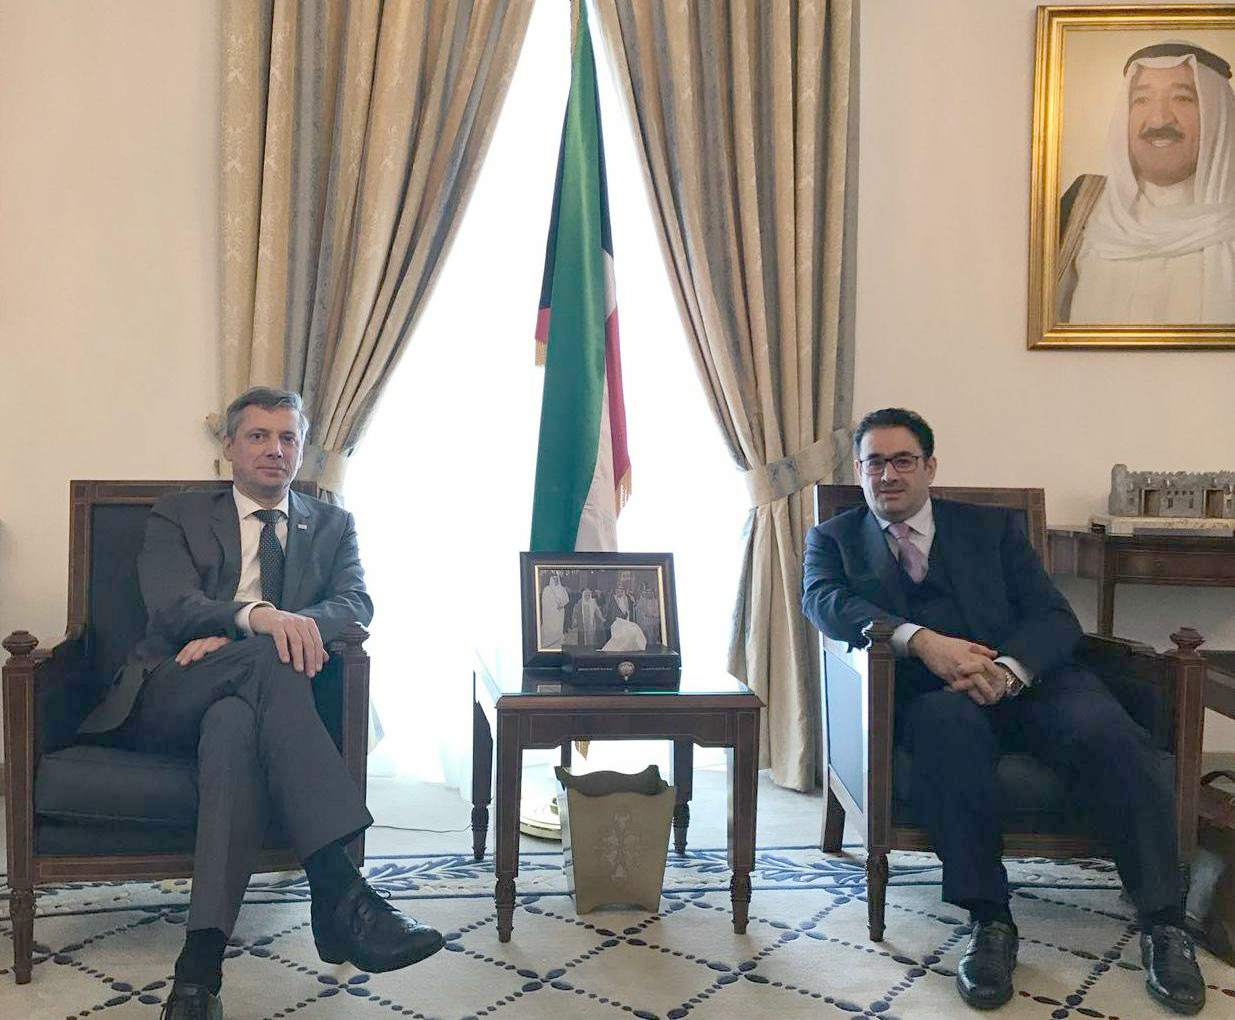 Kuwait's Ambassador to Austria and Permanent Envoy to the United Nations, Sadiq Marafi meets Dean and Executive Secretary of the International Anti-Corruption Academy (IACA) Martin Kreutner